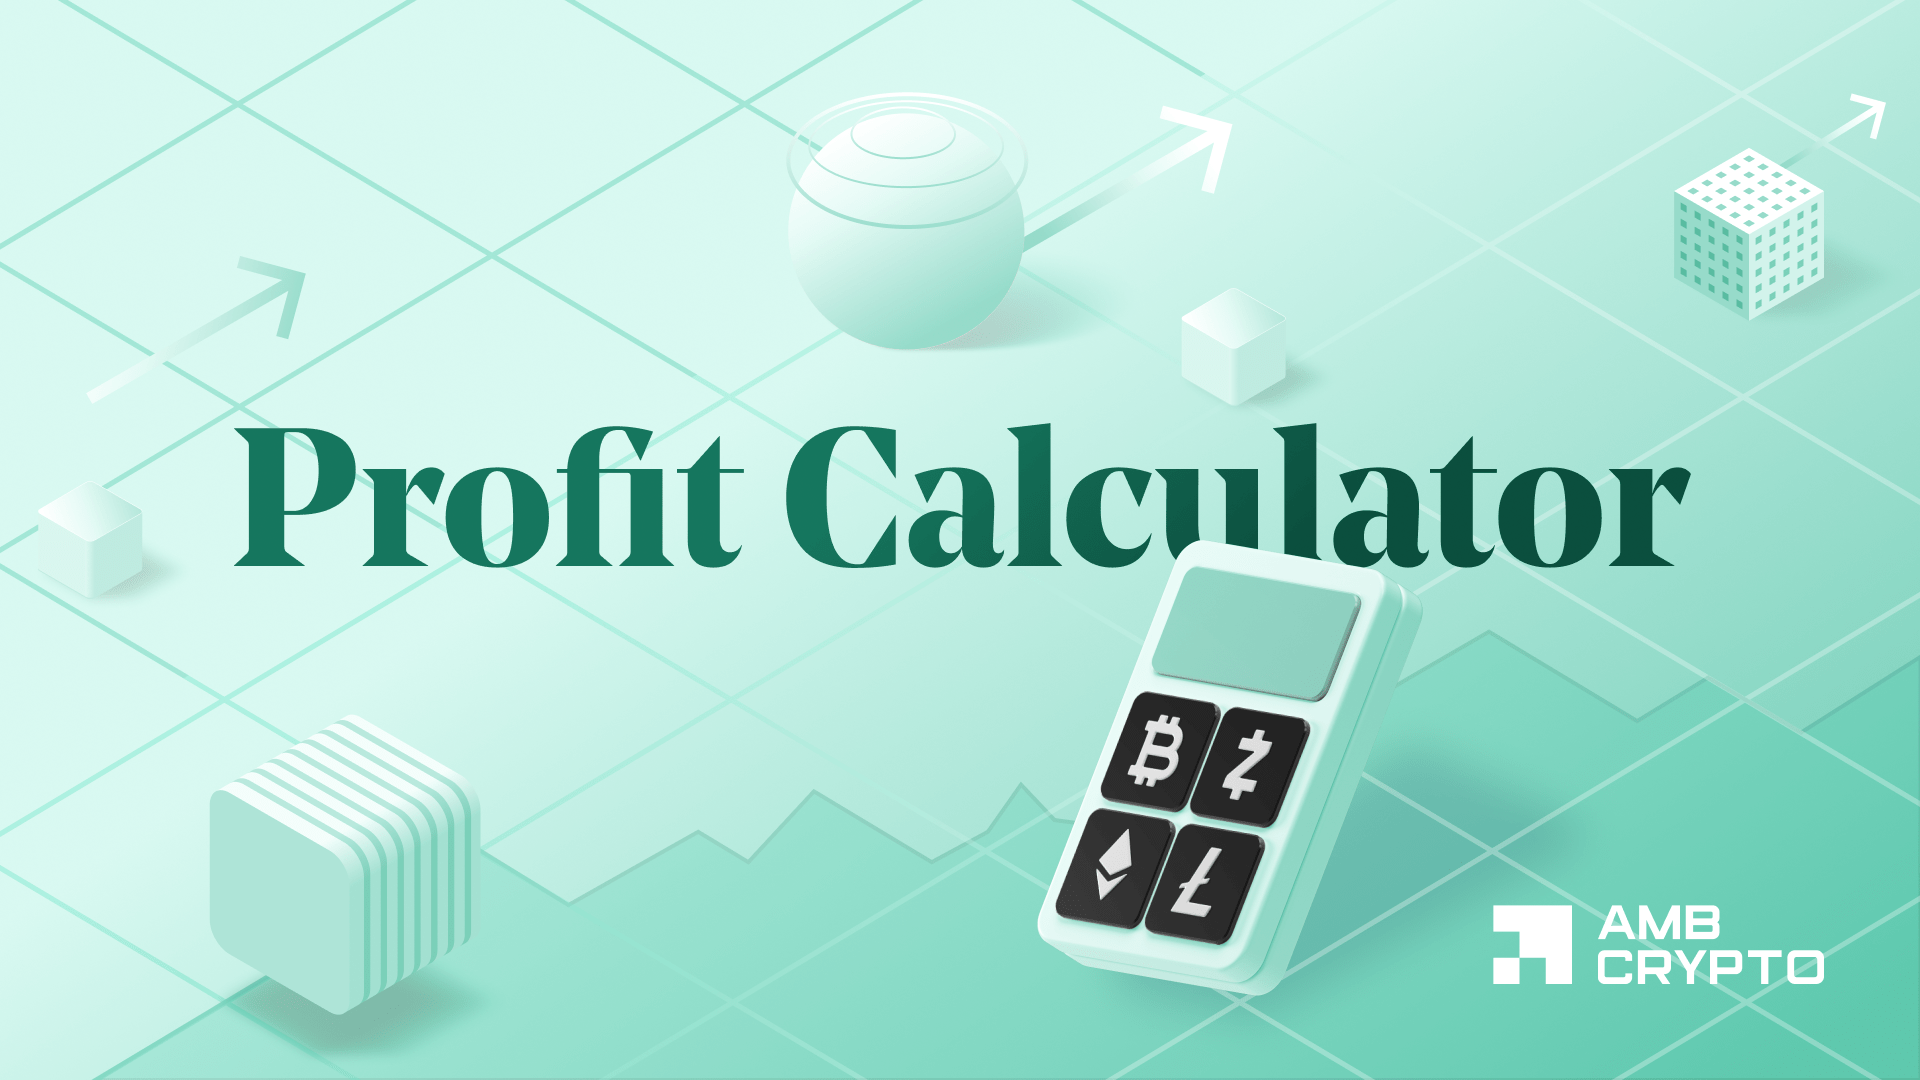 Bitcoin (BTC) Profit Calculator - Calculate Bitcoin Profit/Loss Online